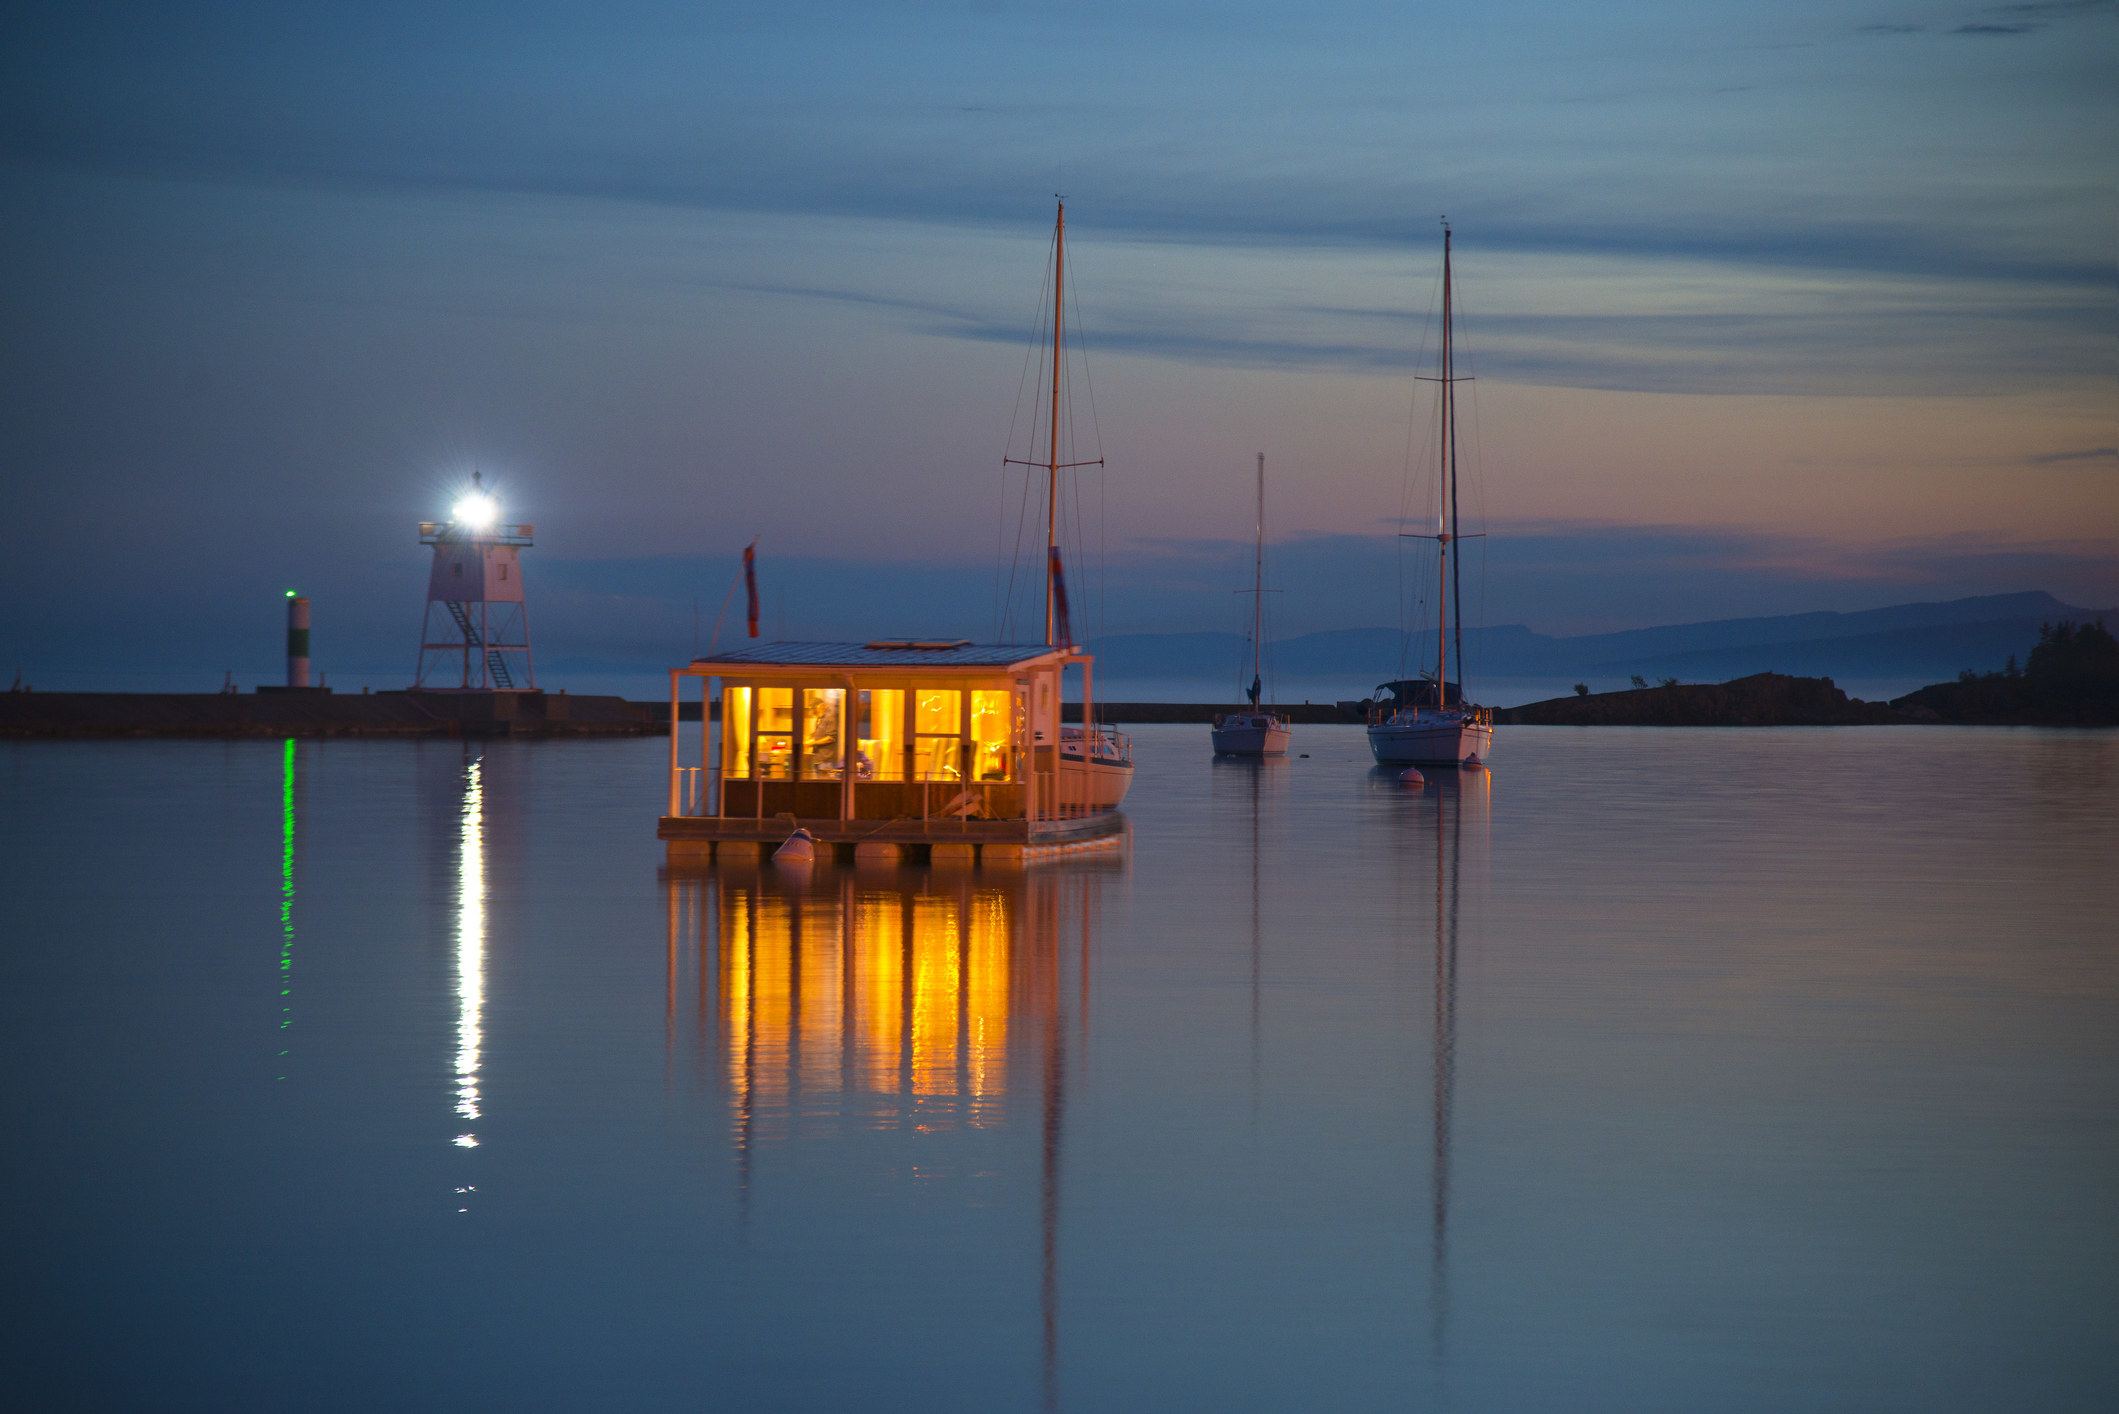 Houseboat lite up on Lake Superior in Grand Marais Harbor, Minensota.